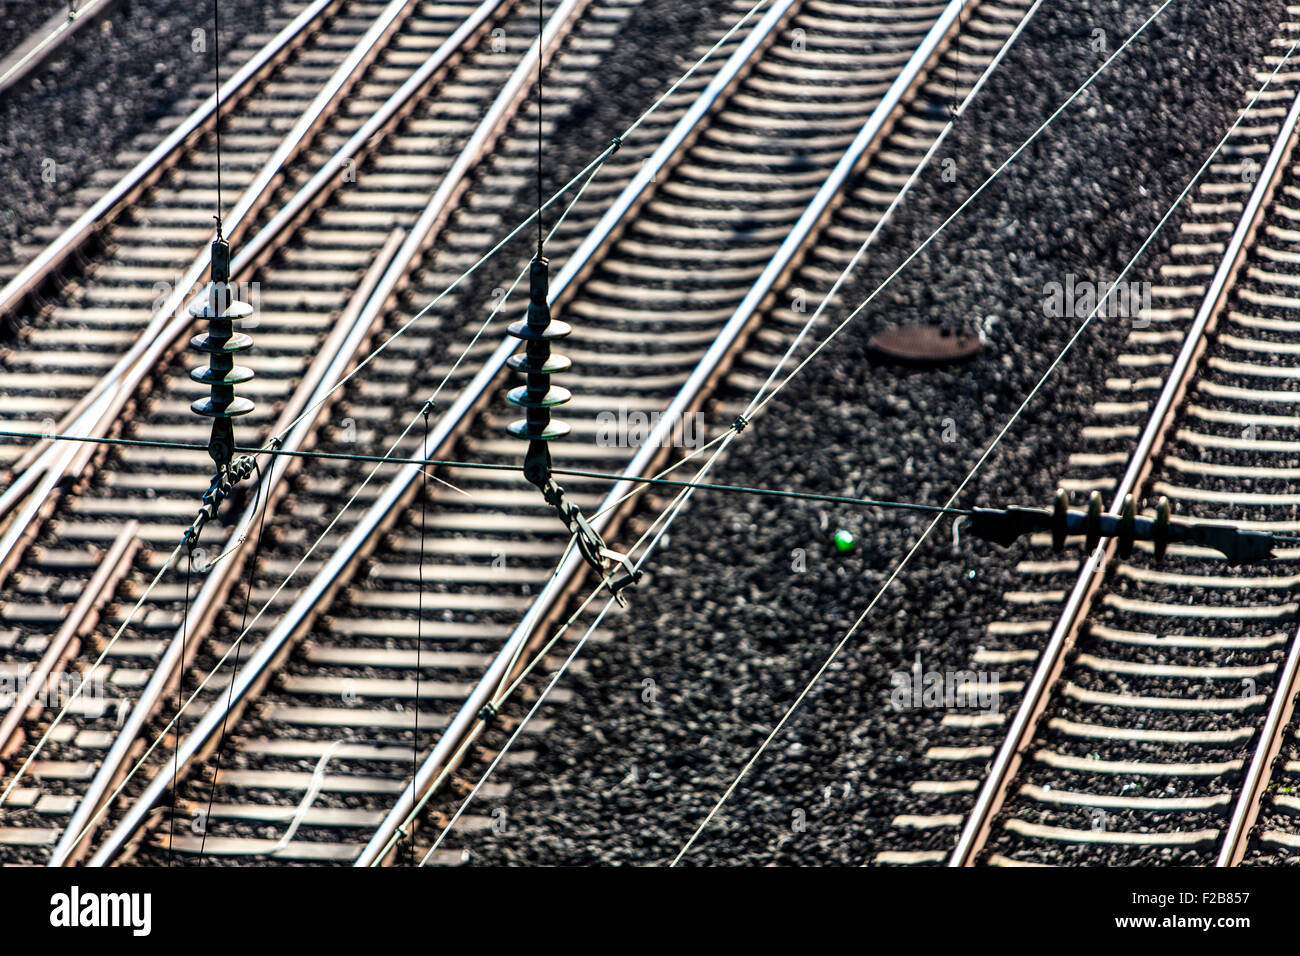 Railway tracks, trains, railroad, Stock Photo